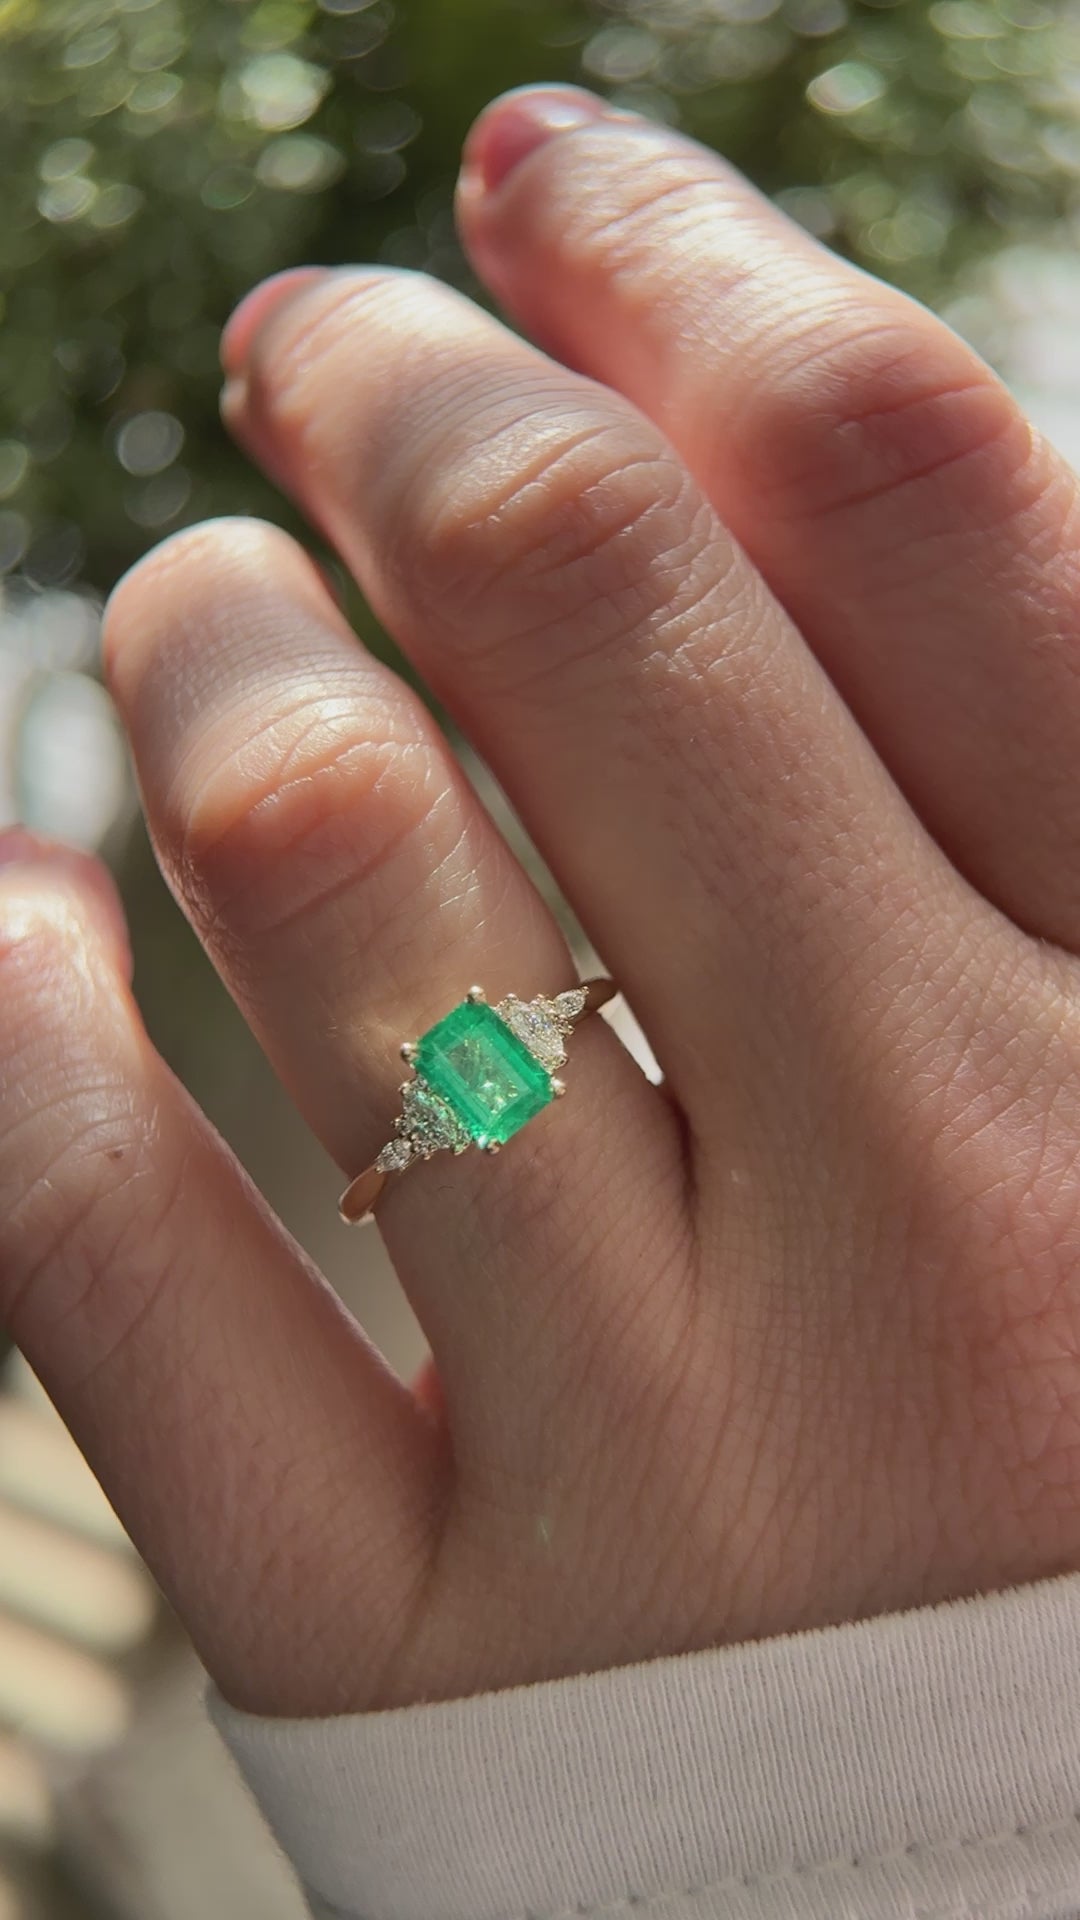 The Maeve 0.83 CT Emerald Cut Emerald Ring